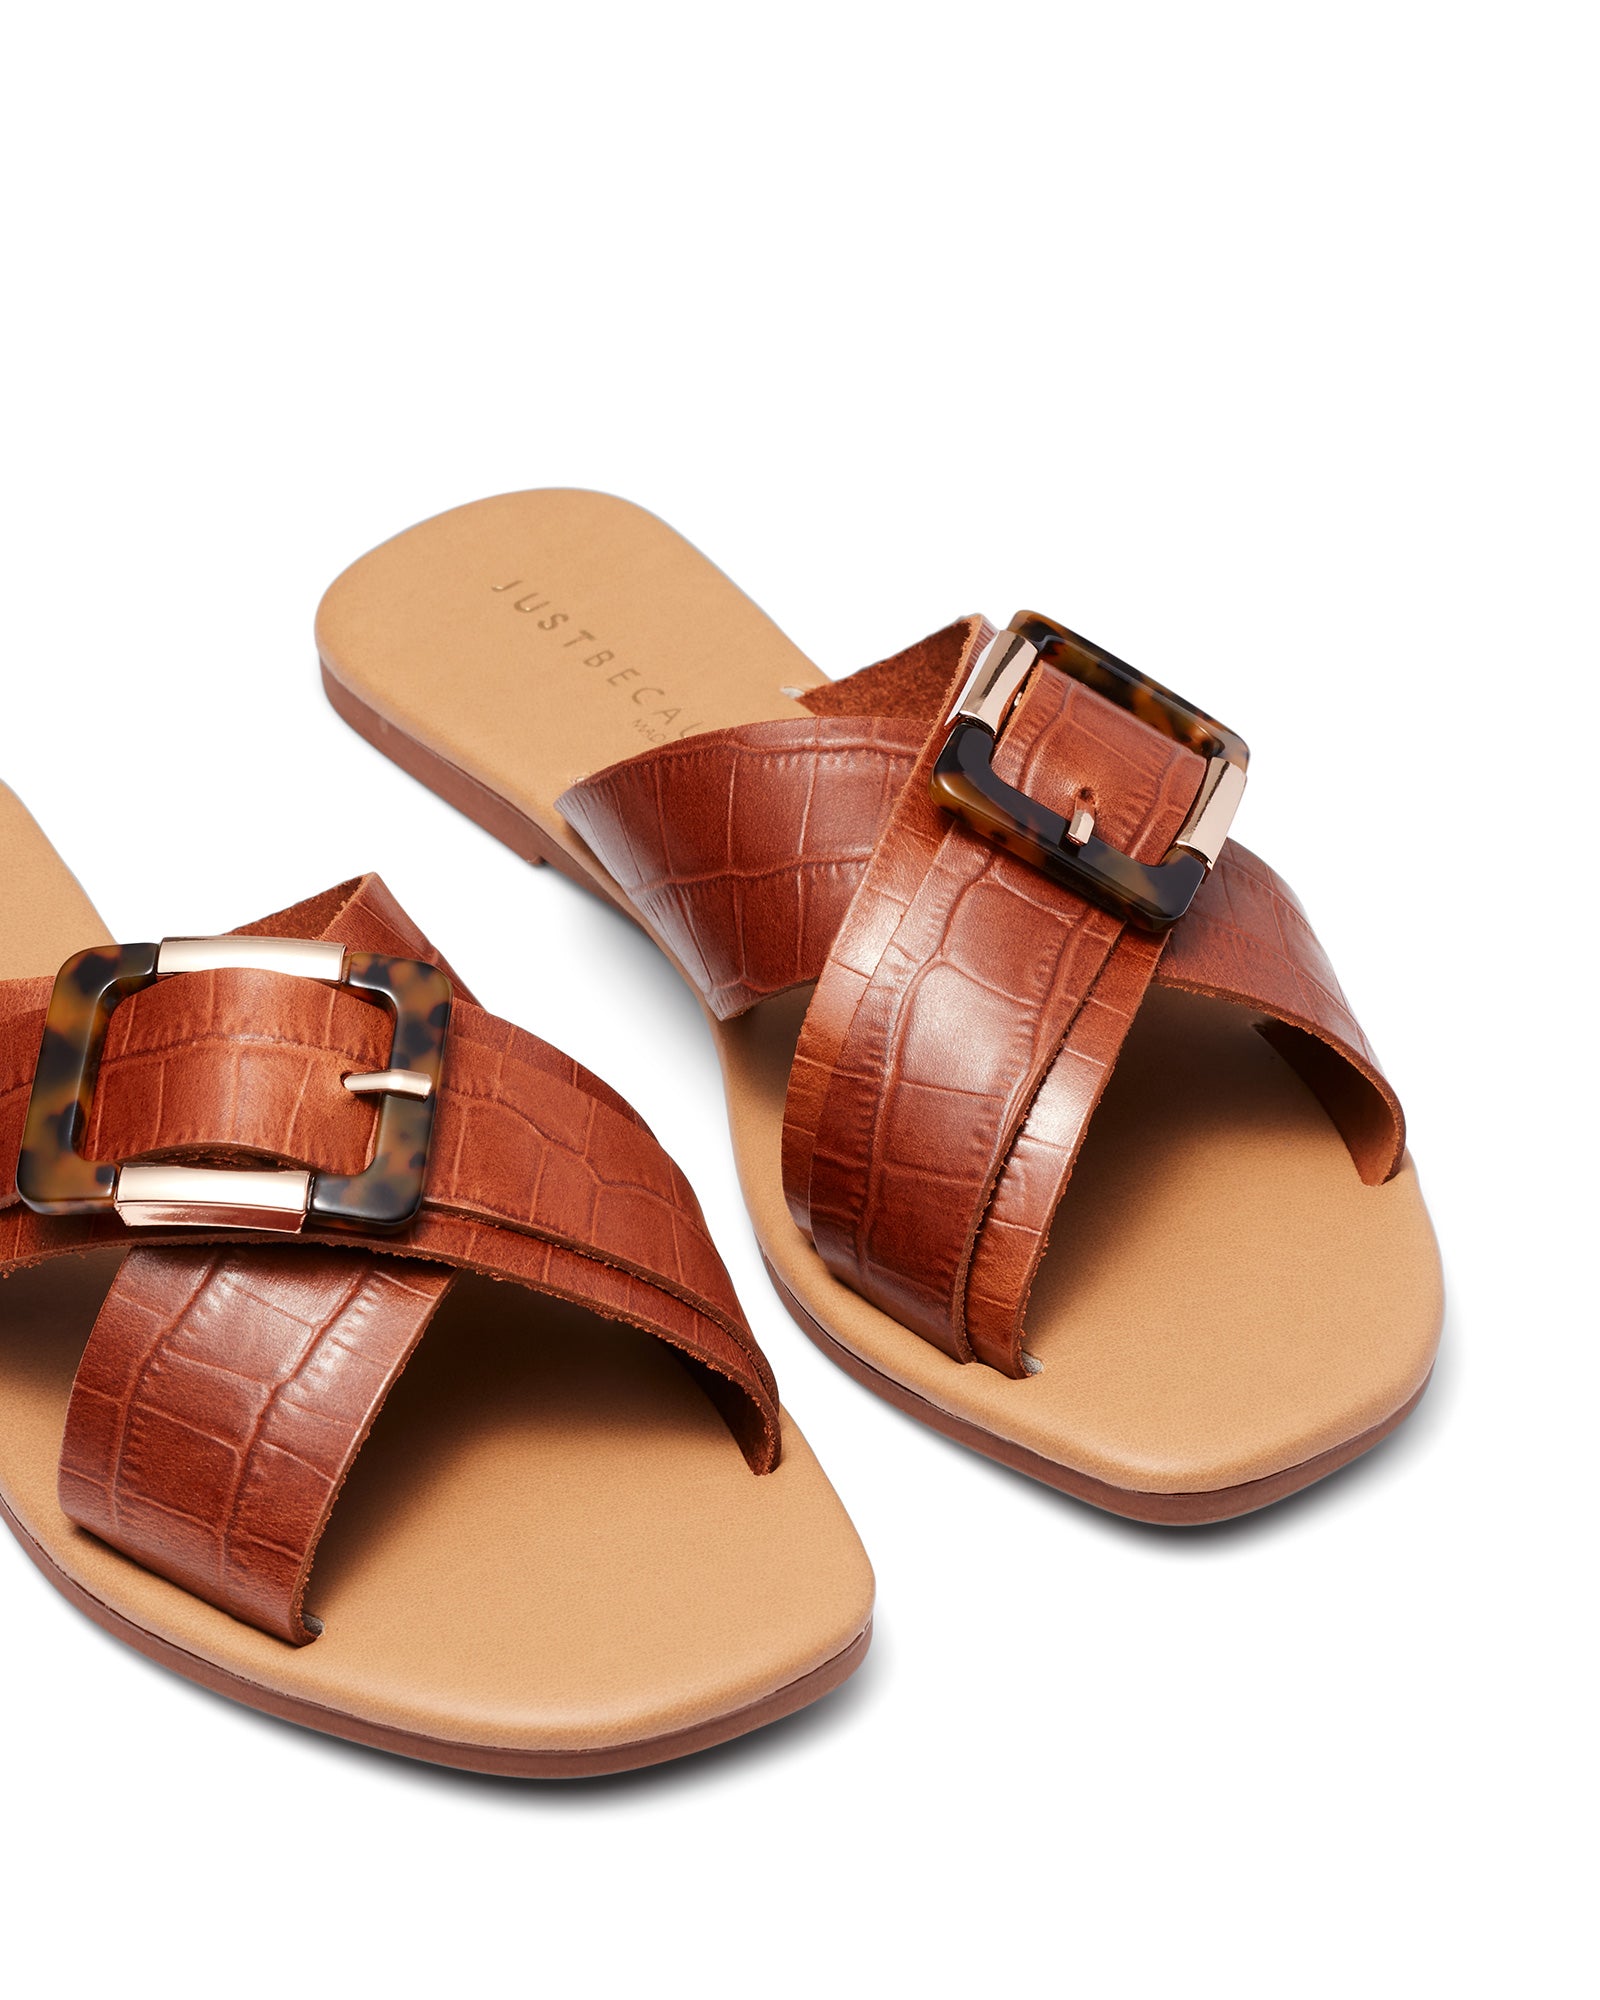 Just Because Shoes Rimini Tan Croc | Leather Sandals | Slides | Flats